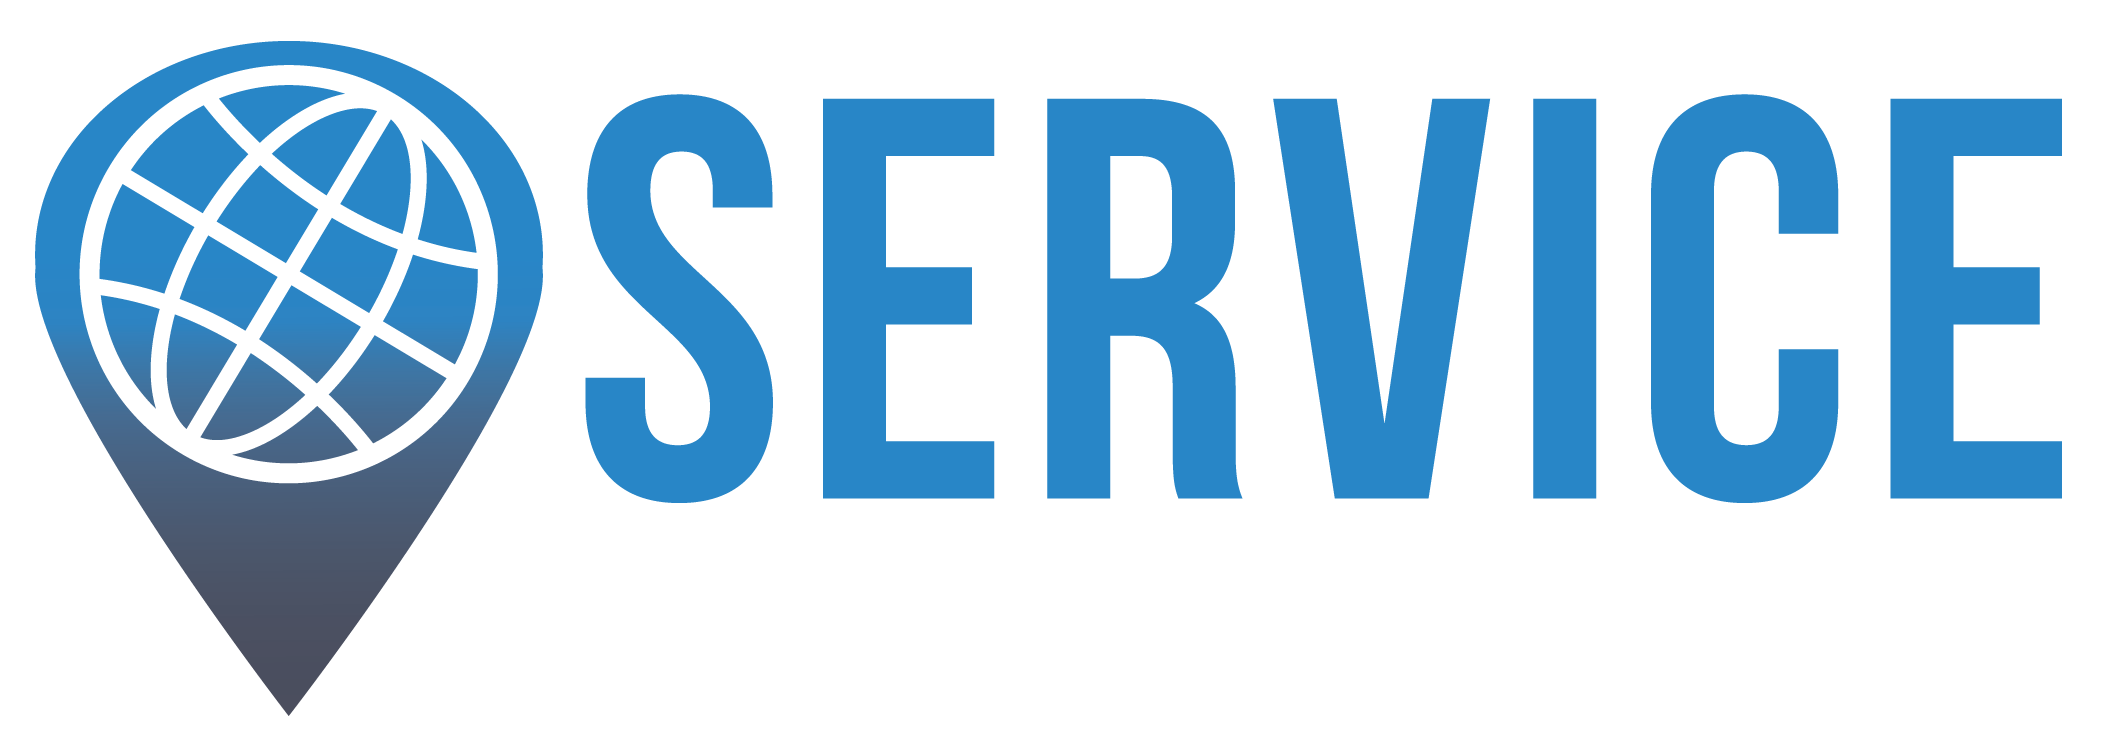 Service Technologies